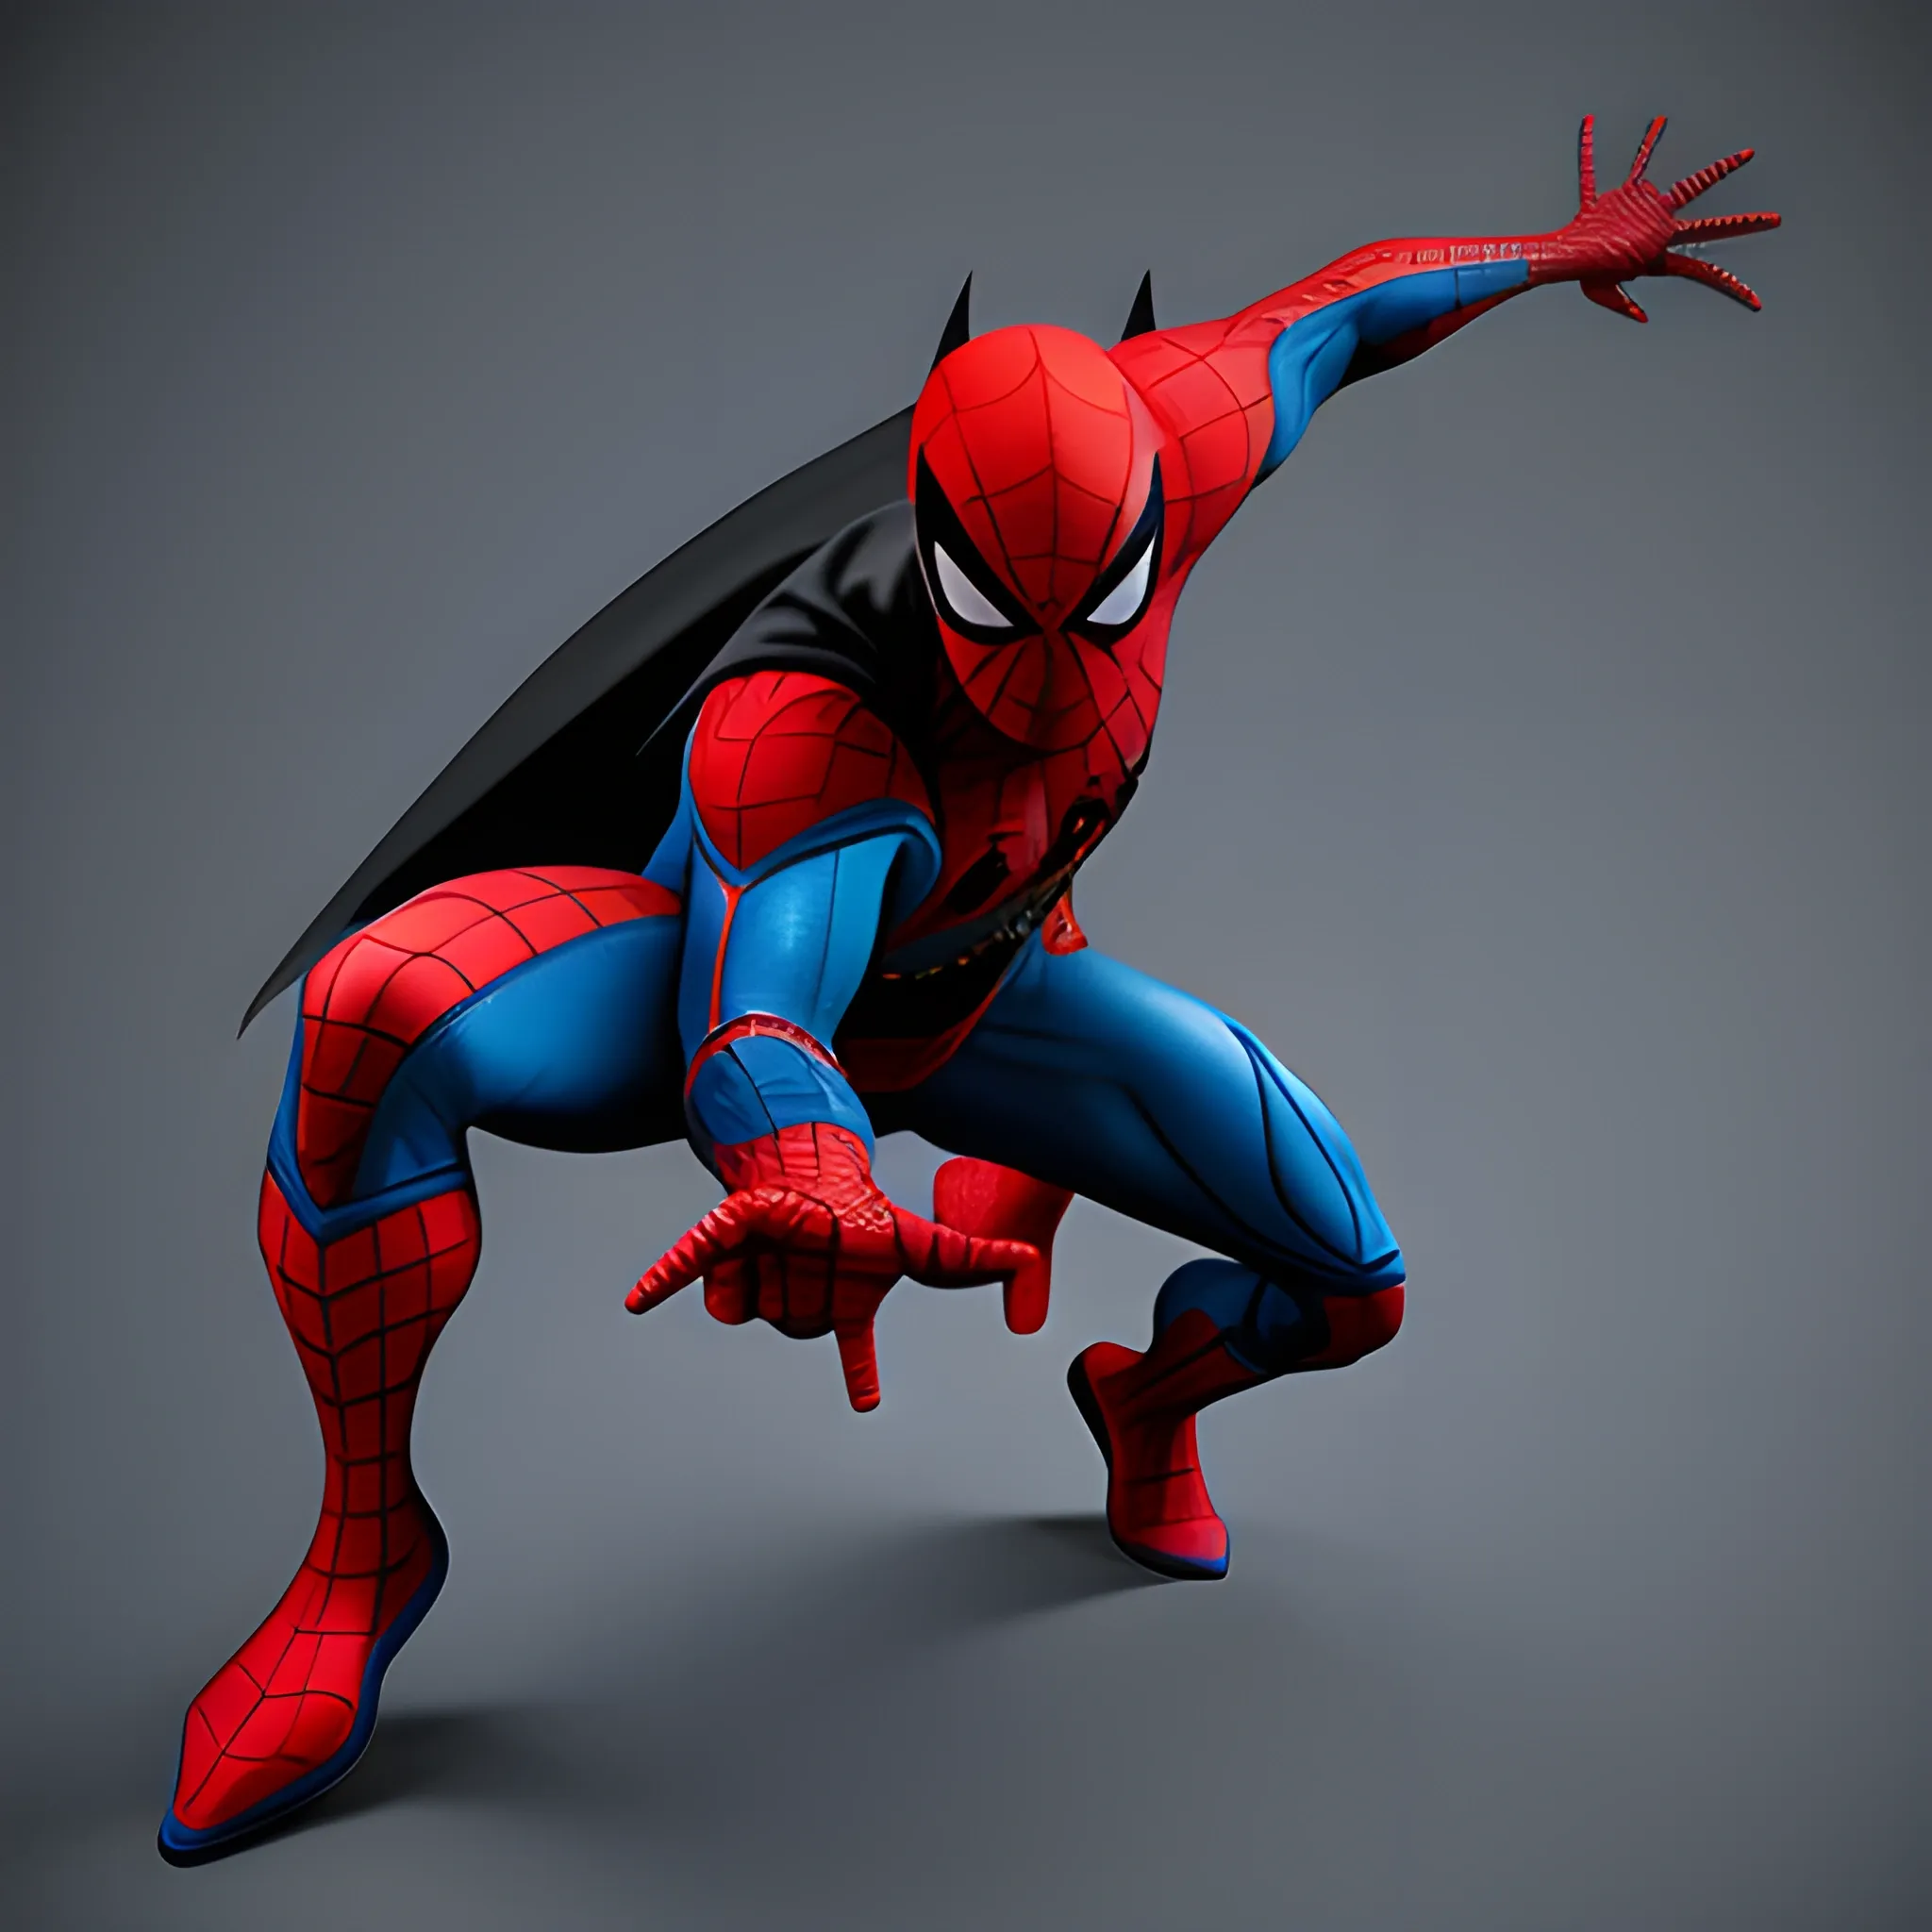 Spider Man Ready Pose 3D Model $159 - .3ds .blend .c4d .fbx .max .ma .lxo  .obj .gltf .upk .unitypackage .usdz - Free3D